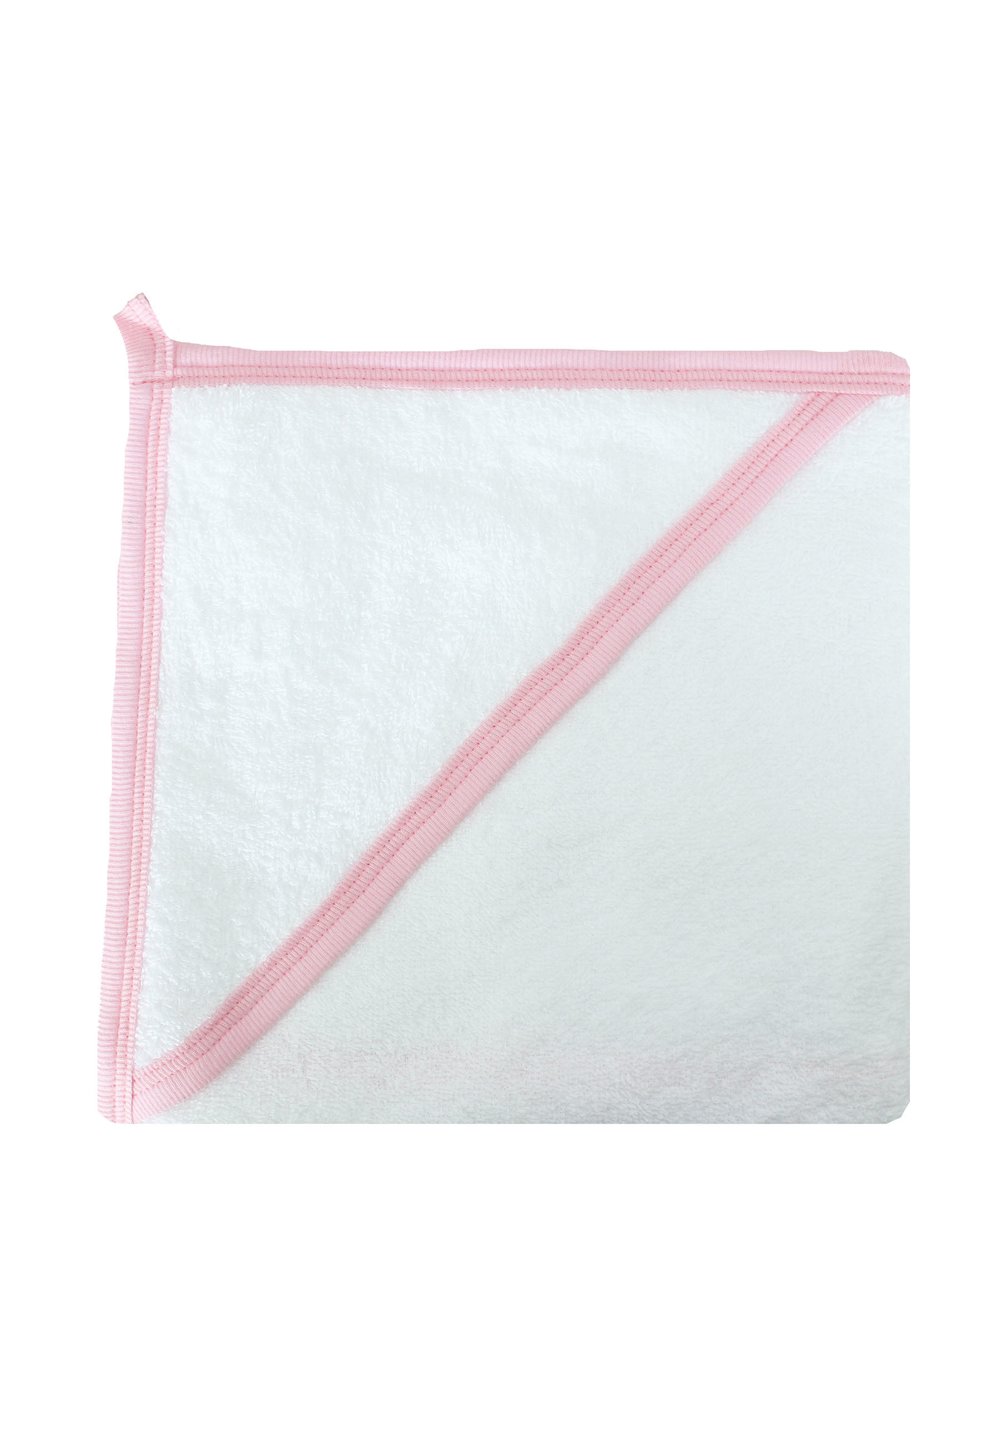 Prosop bumbac, alb cu margine roz, 75 x 75 cm Prichindel